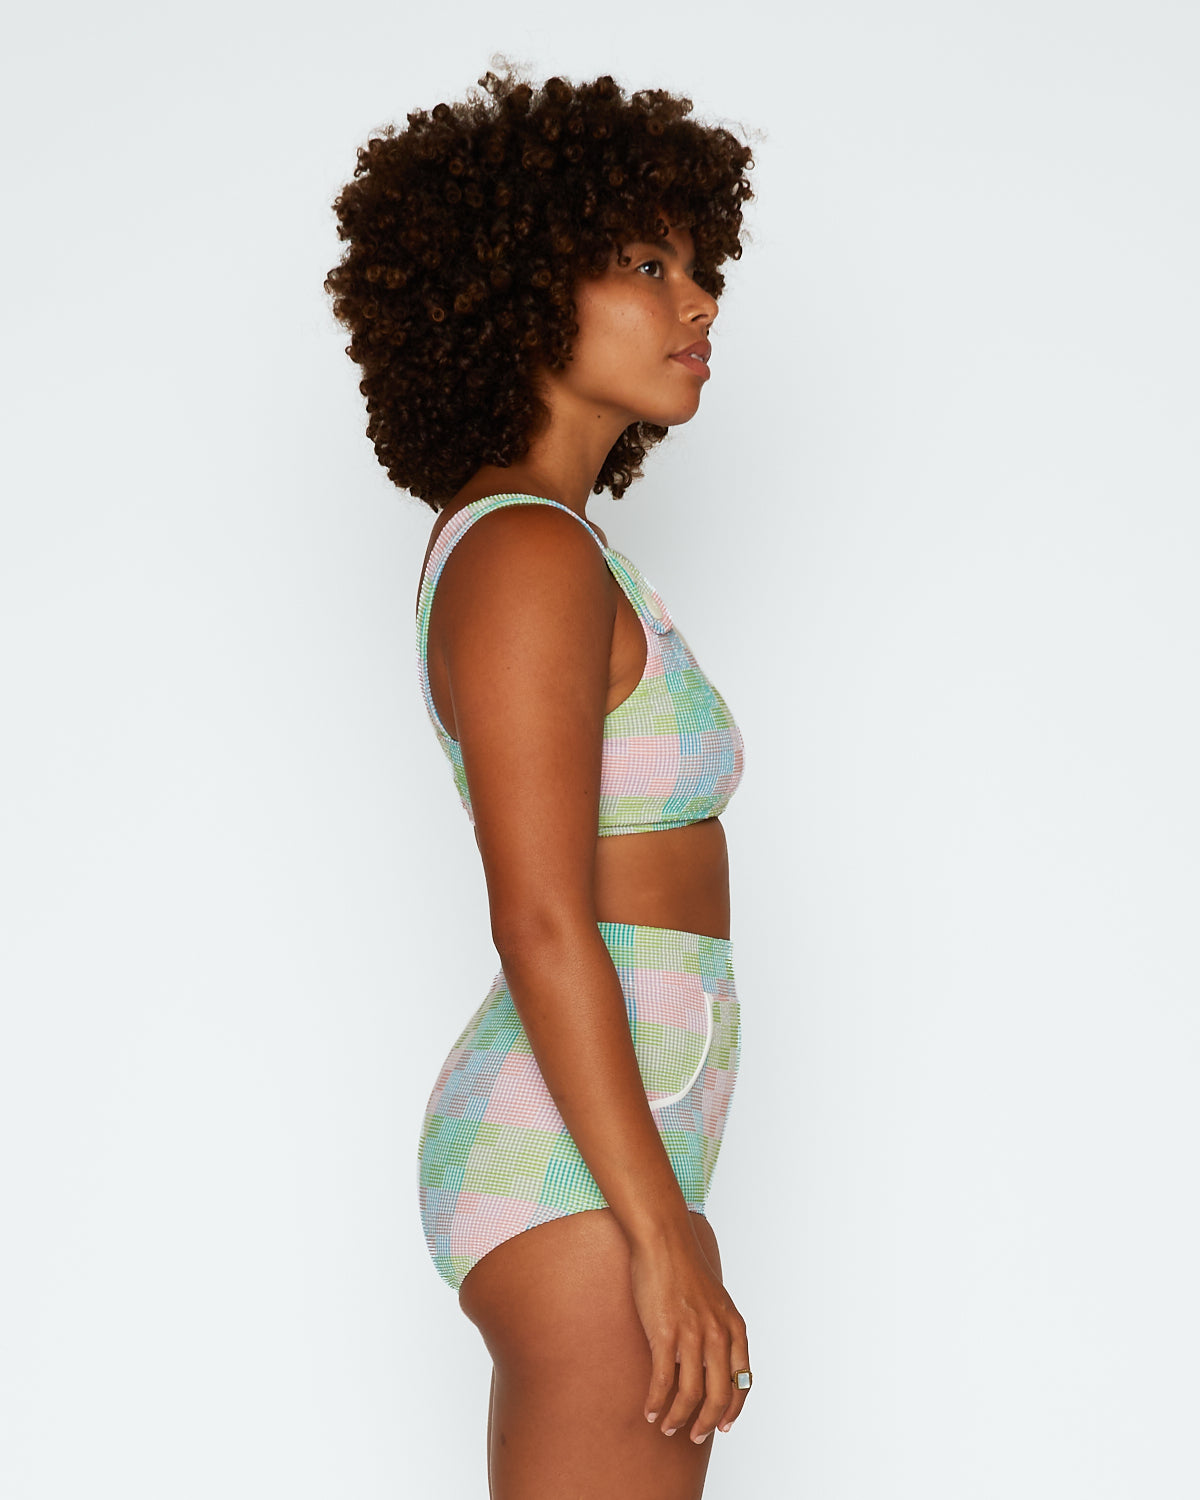 Georgia Amos Multicolor Plaid Pattern Swim Suit Bikini Top UV Protection